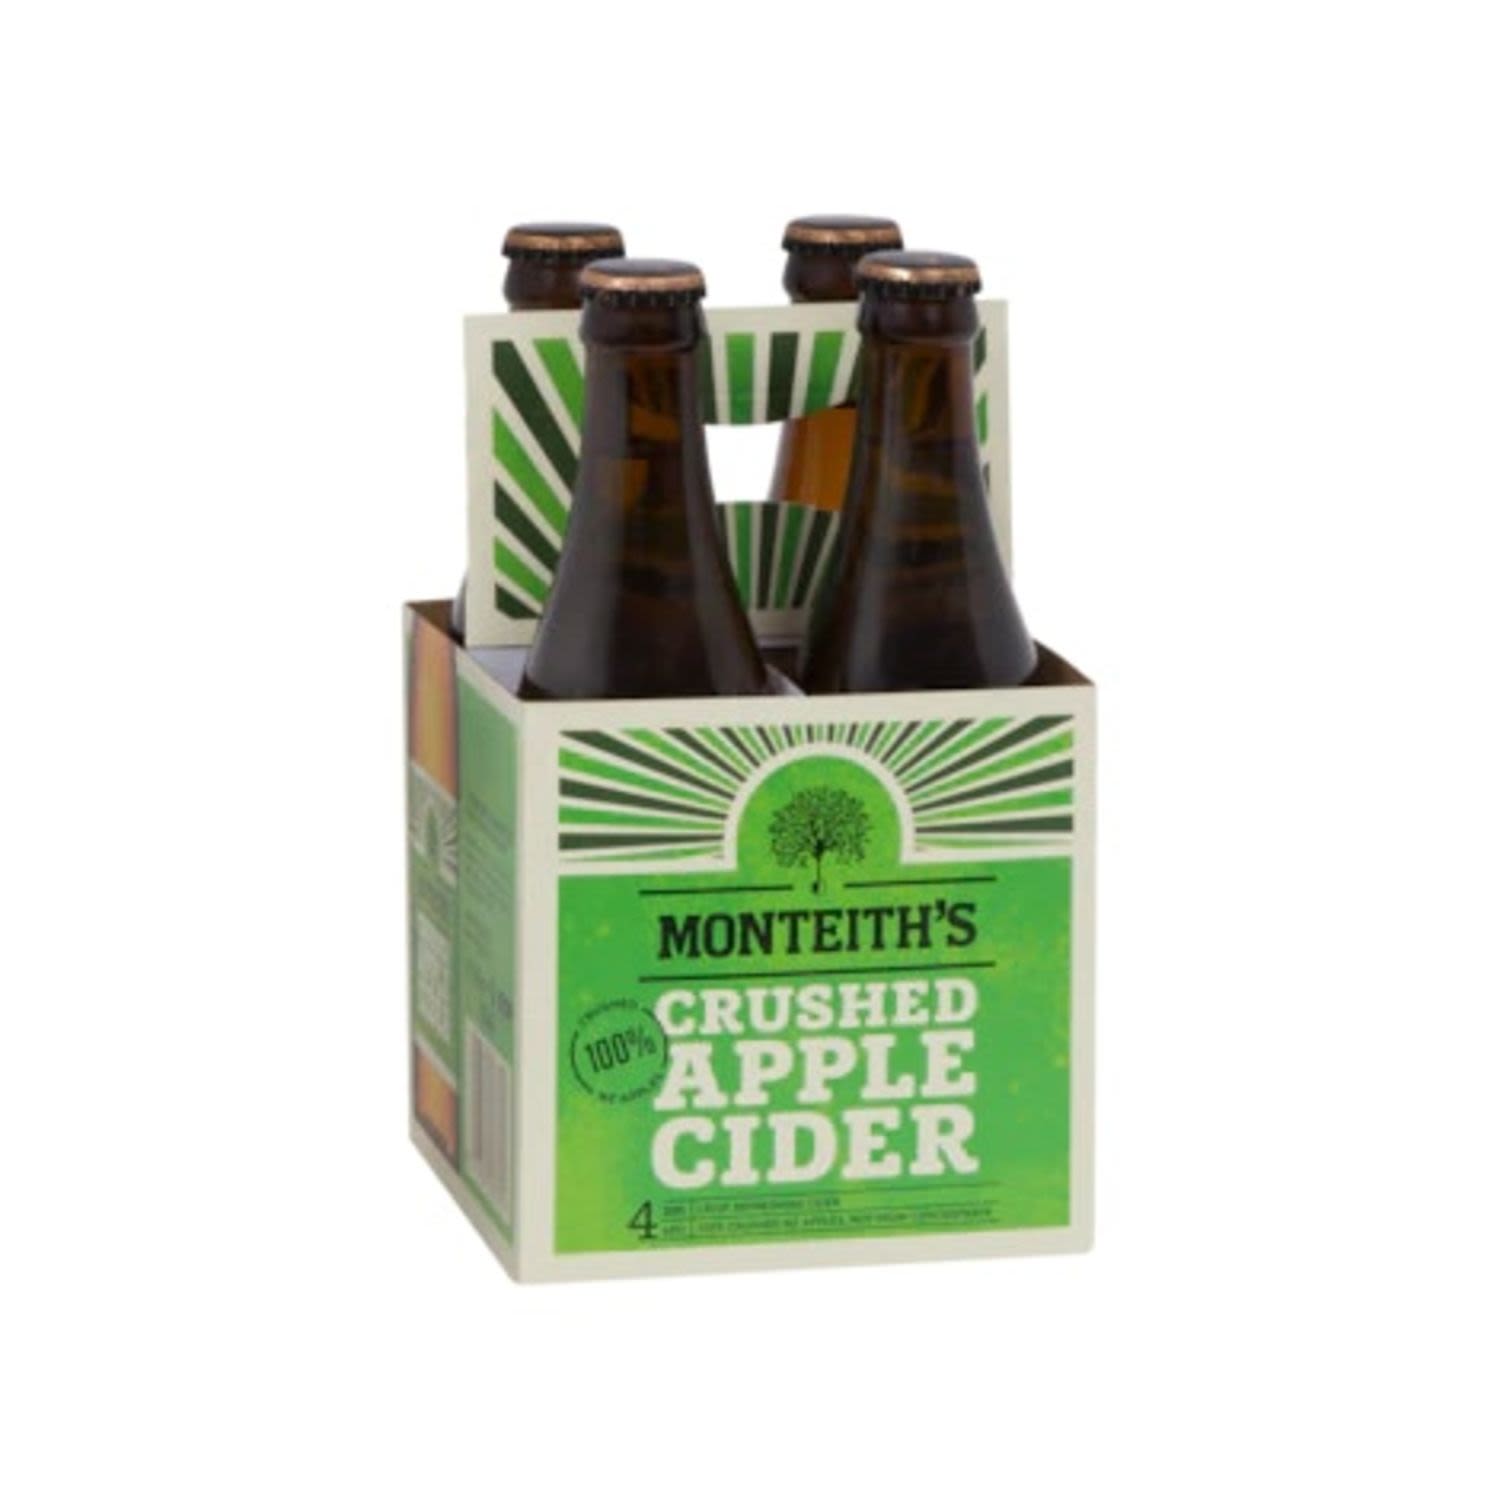 Monteiths Crushed Apple Cider Bottle 330mL 4 Pack